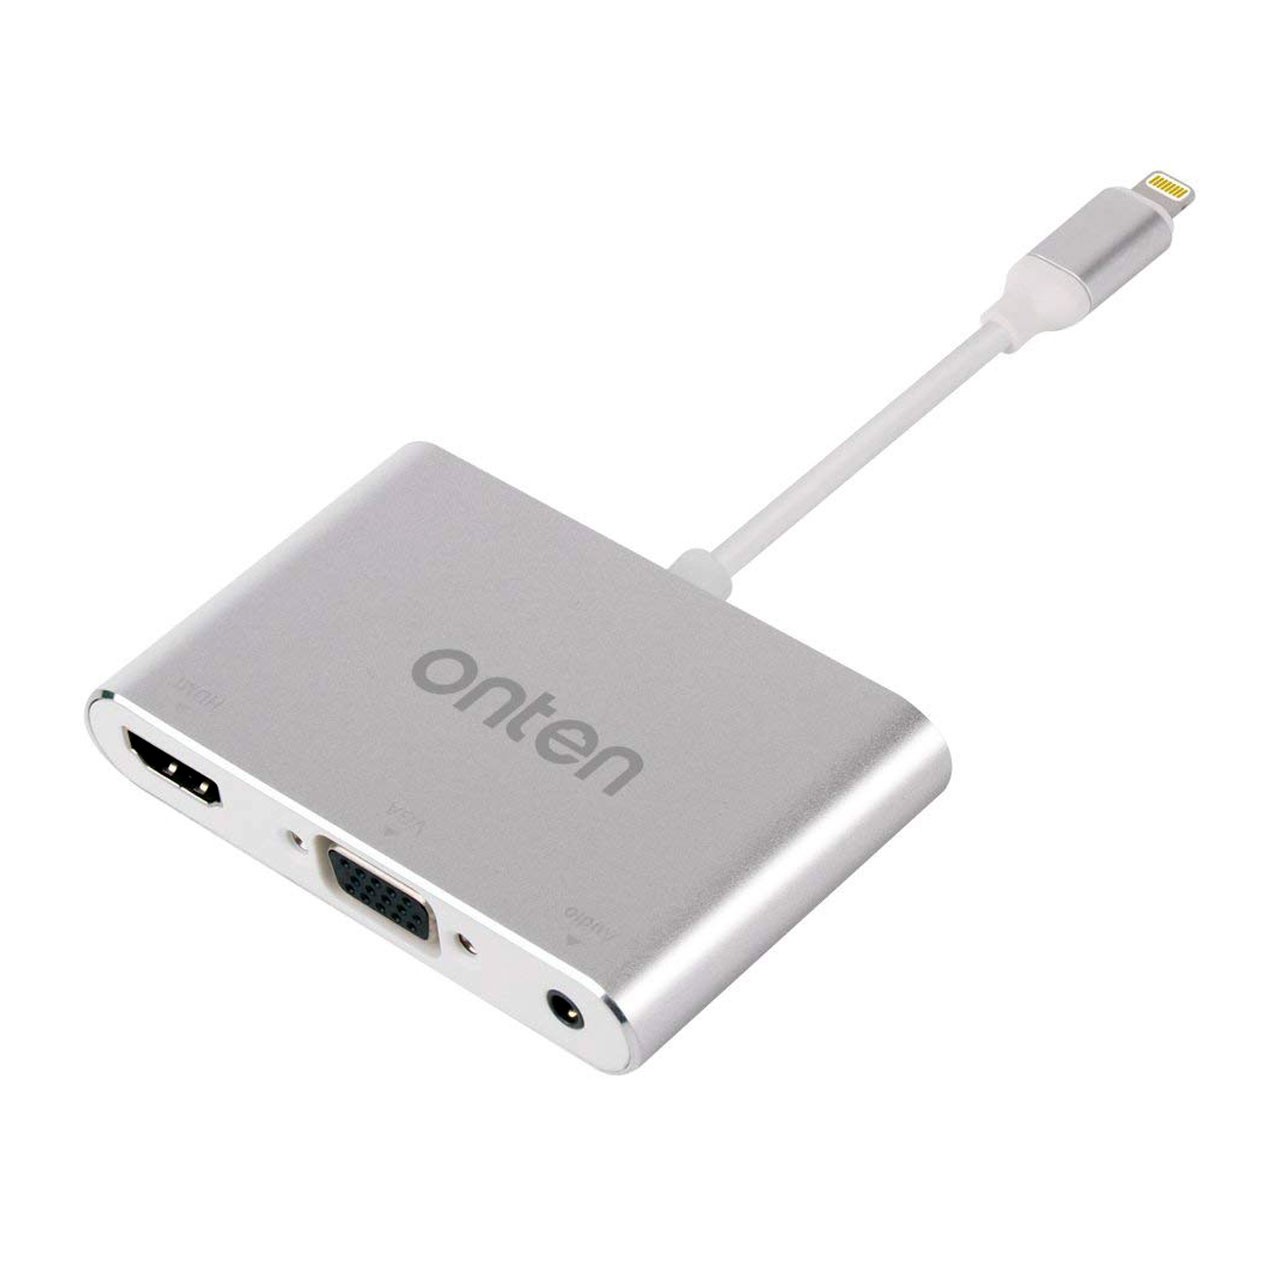 تبدیل LIGHTNING به HDMI و VGA برند ONTEN مدل ONT-7585C 

Onten Lightning to HDMI VGA Audio Adapter for iPhone